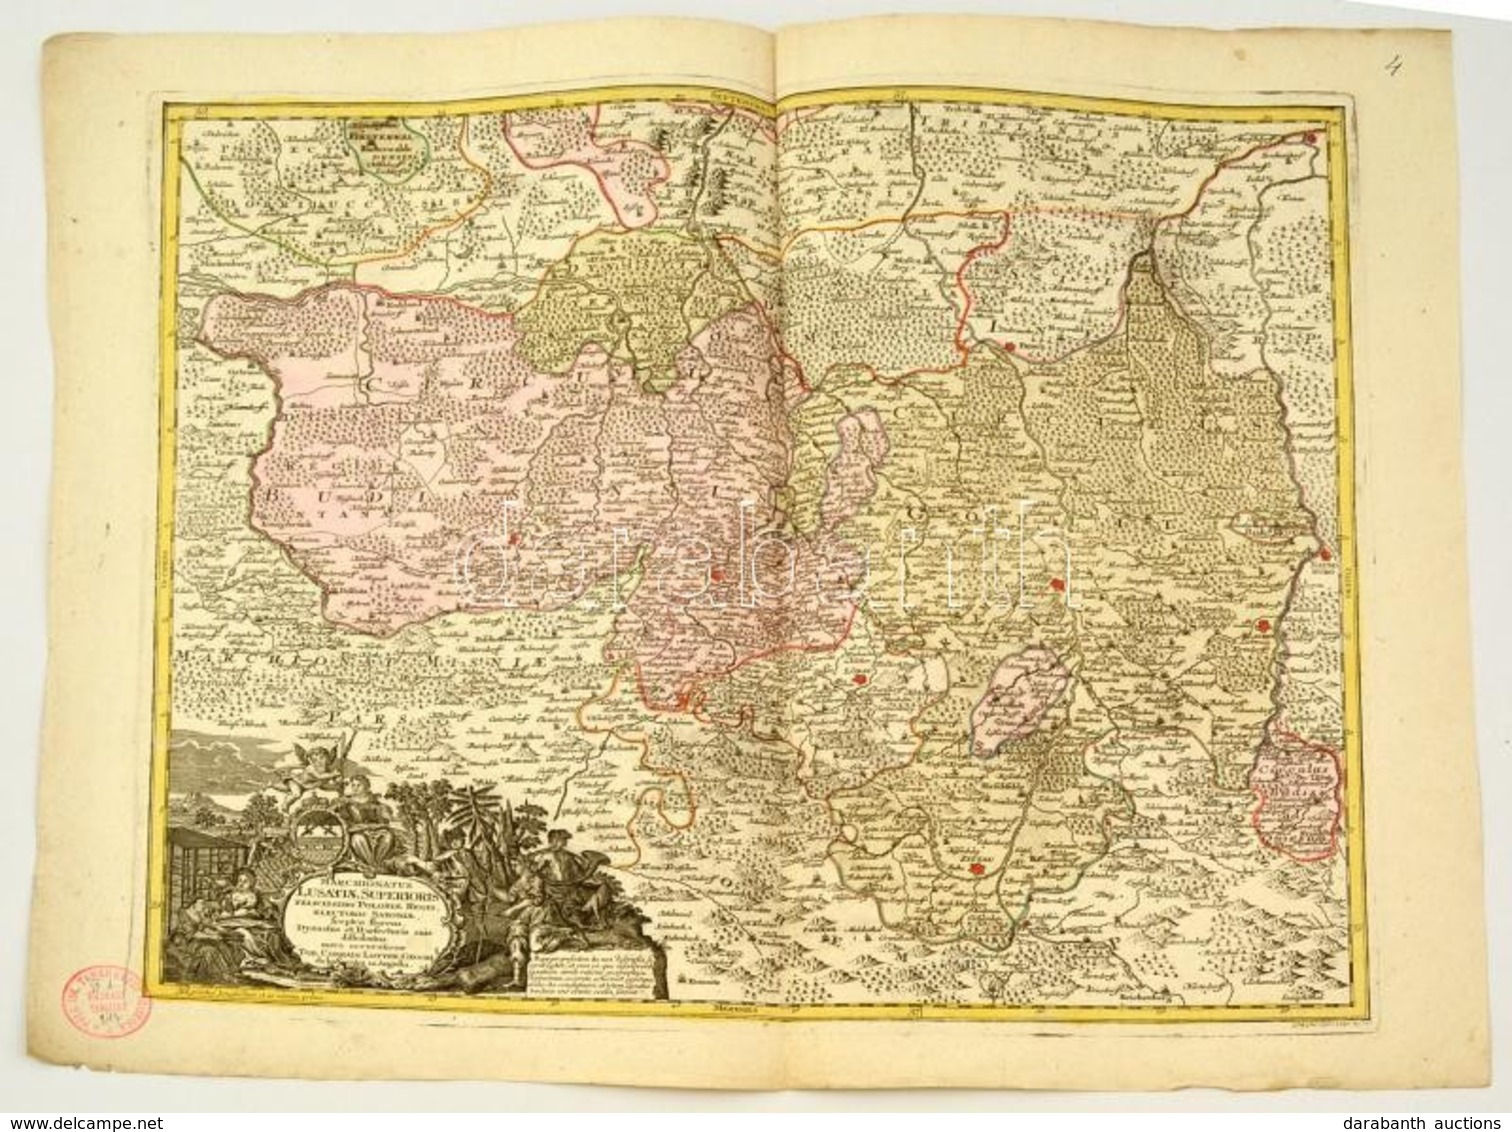 Lotter, Tobias Conrad: (1717-1777): Fels? Lausitz Hercegség Rézmetszet? Térképe. Marchionatus Lusatiae Superioris Bohemi - Prints & Engravings